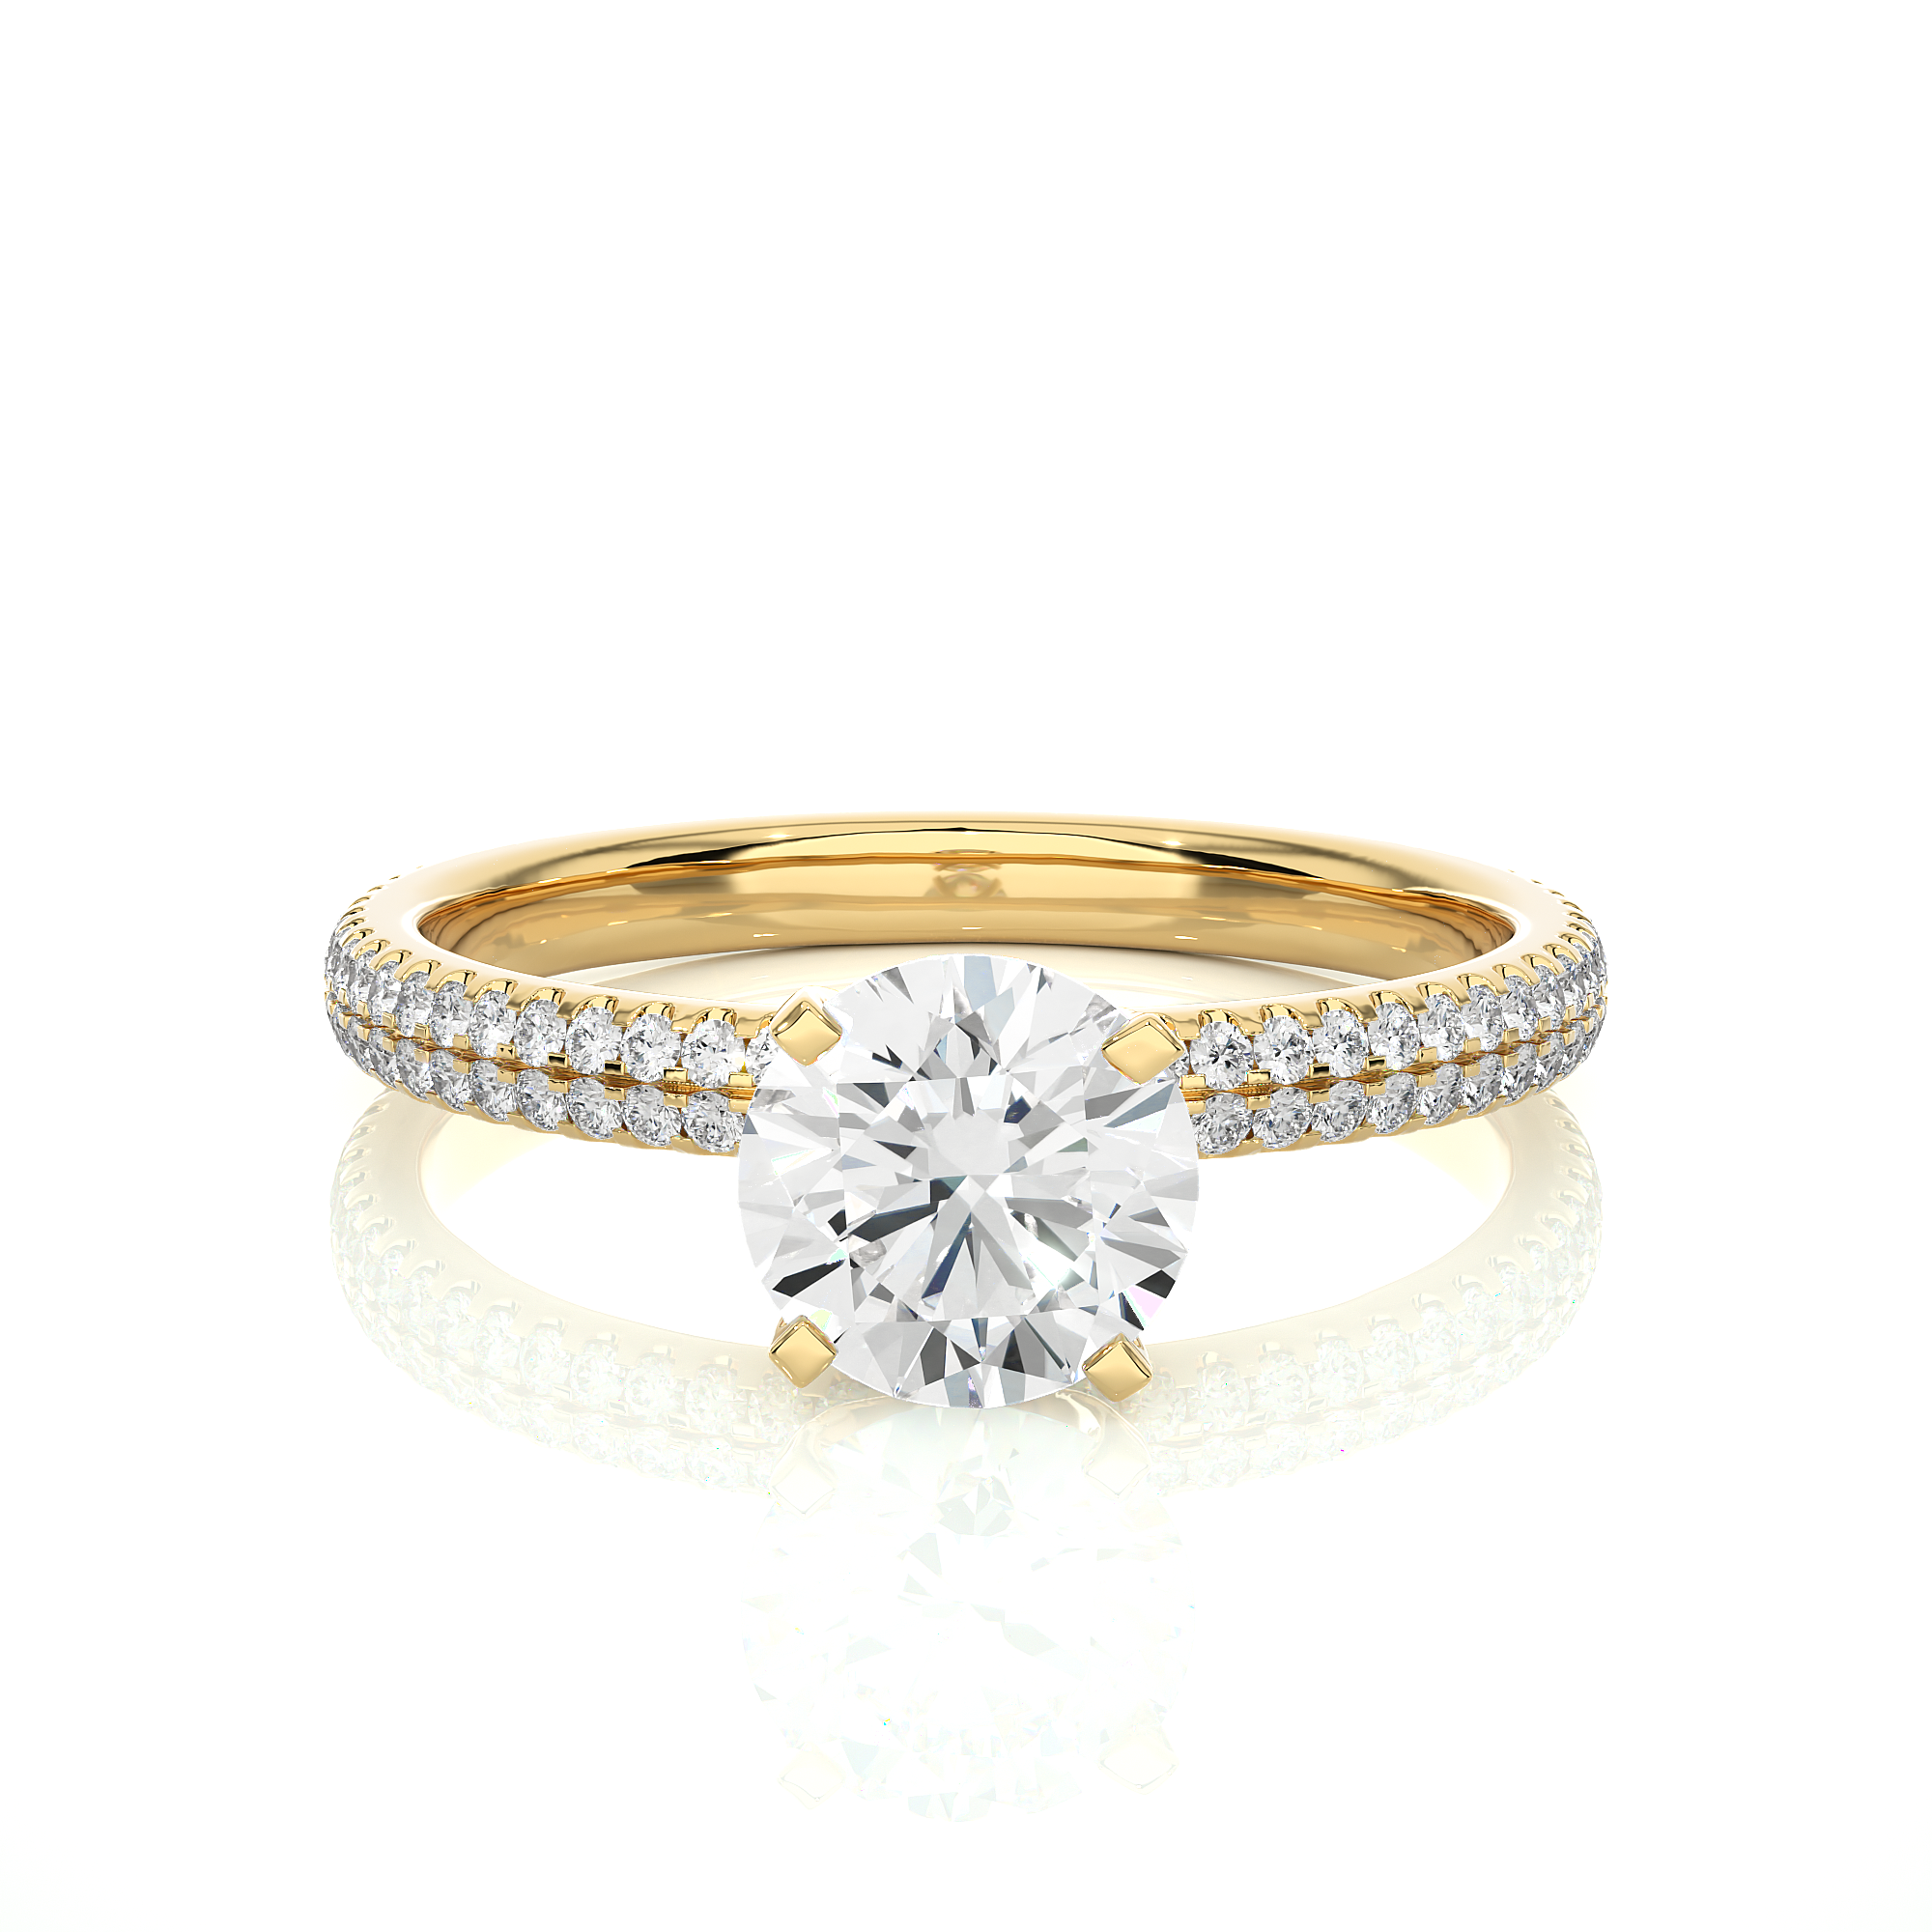 Tiana Ring - Solitaire Diamond Ring